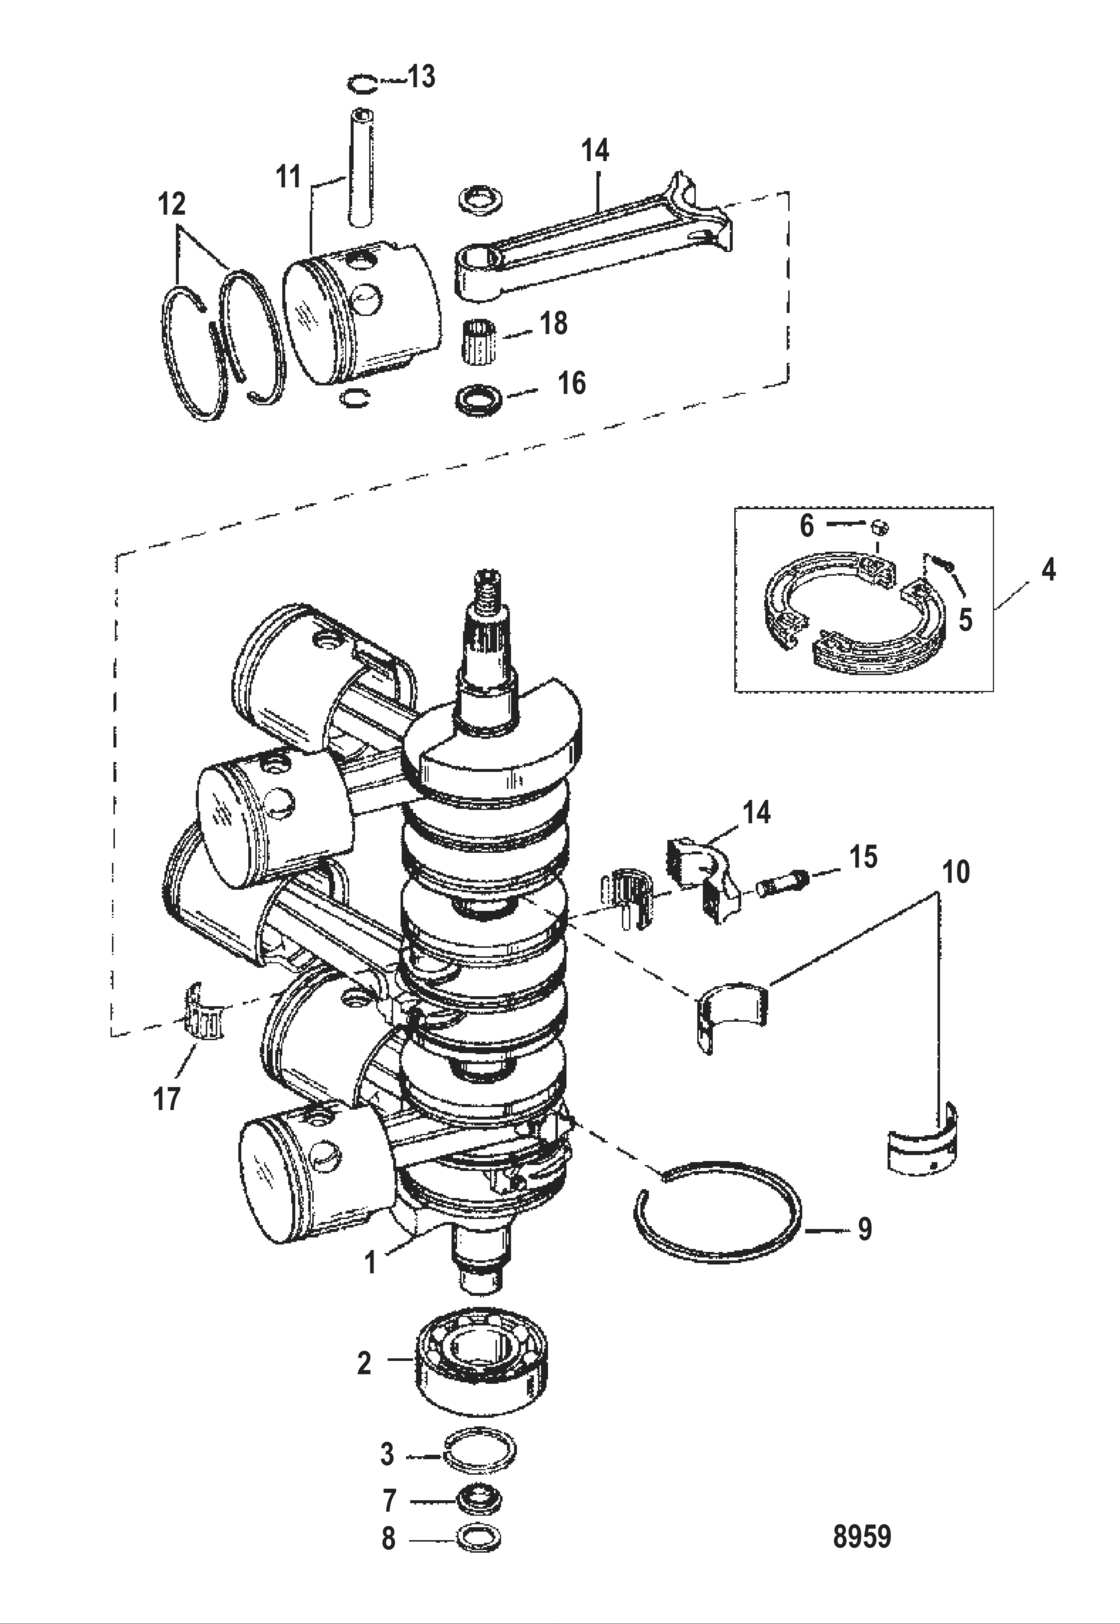 Crankshaft (Connecting Rod Forging # Is 644-818141)